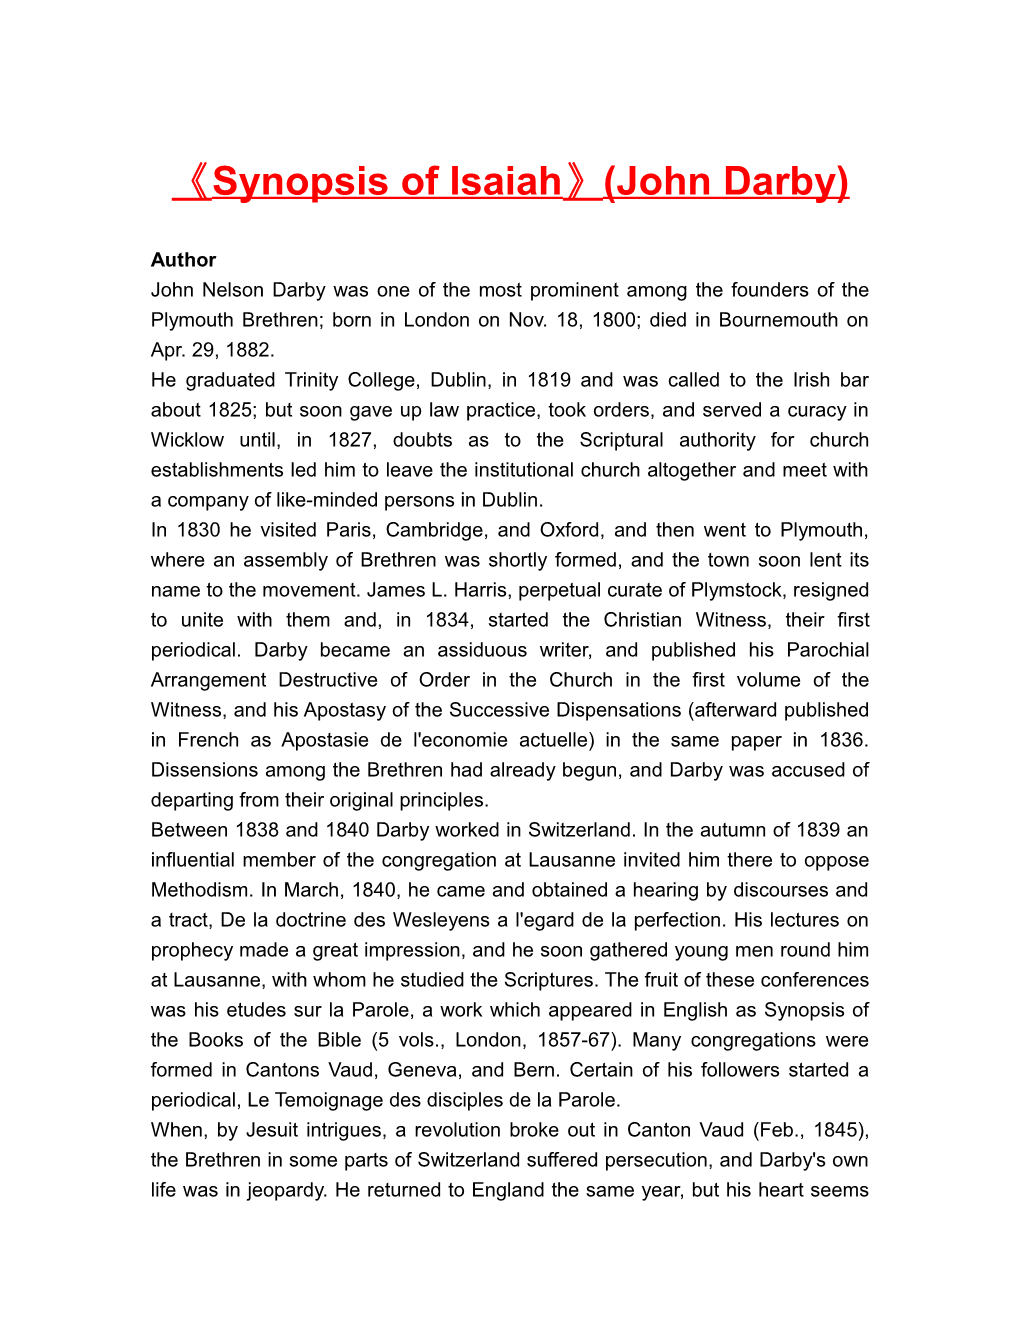 Synopsis of Isaiah (John Darby)